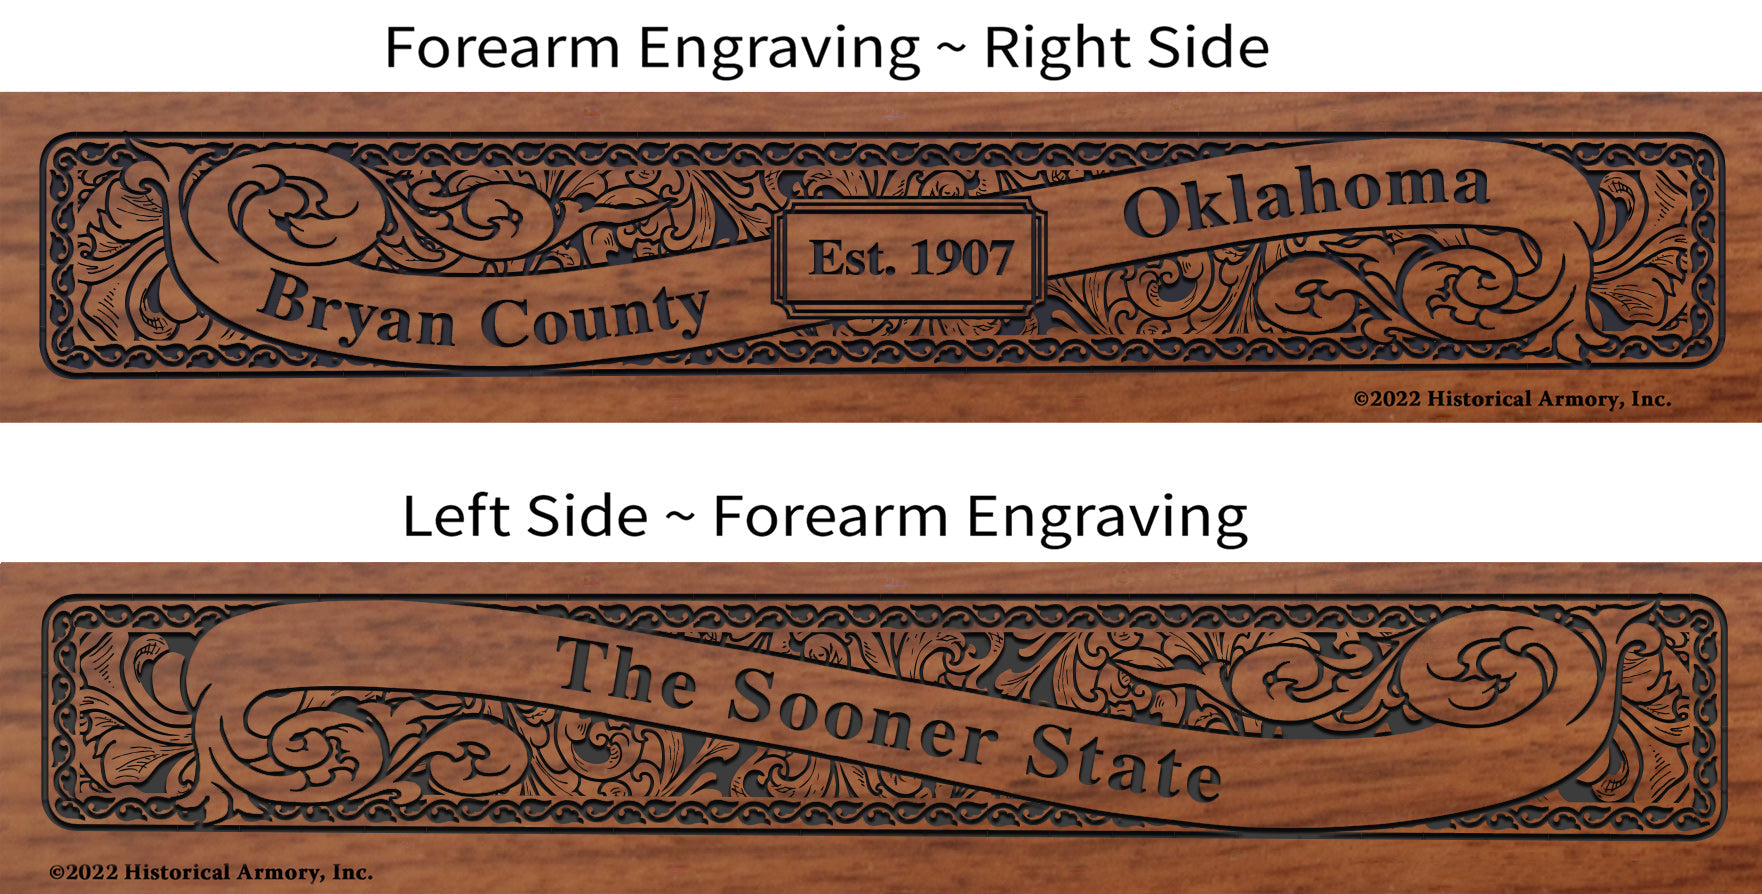 Bryan County Oklahoma Engraved Rifle Forearm